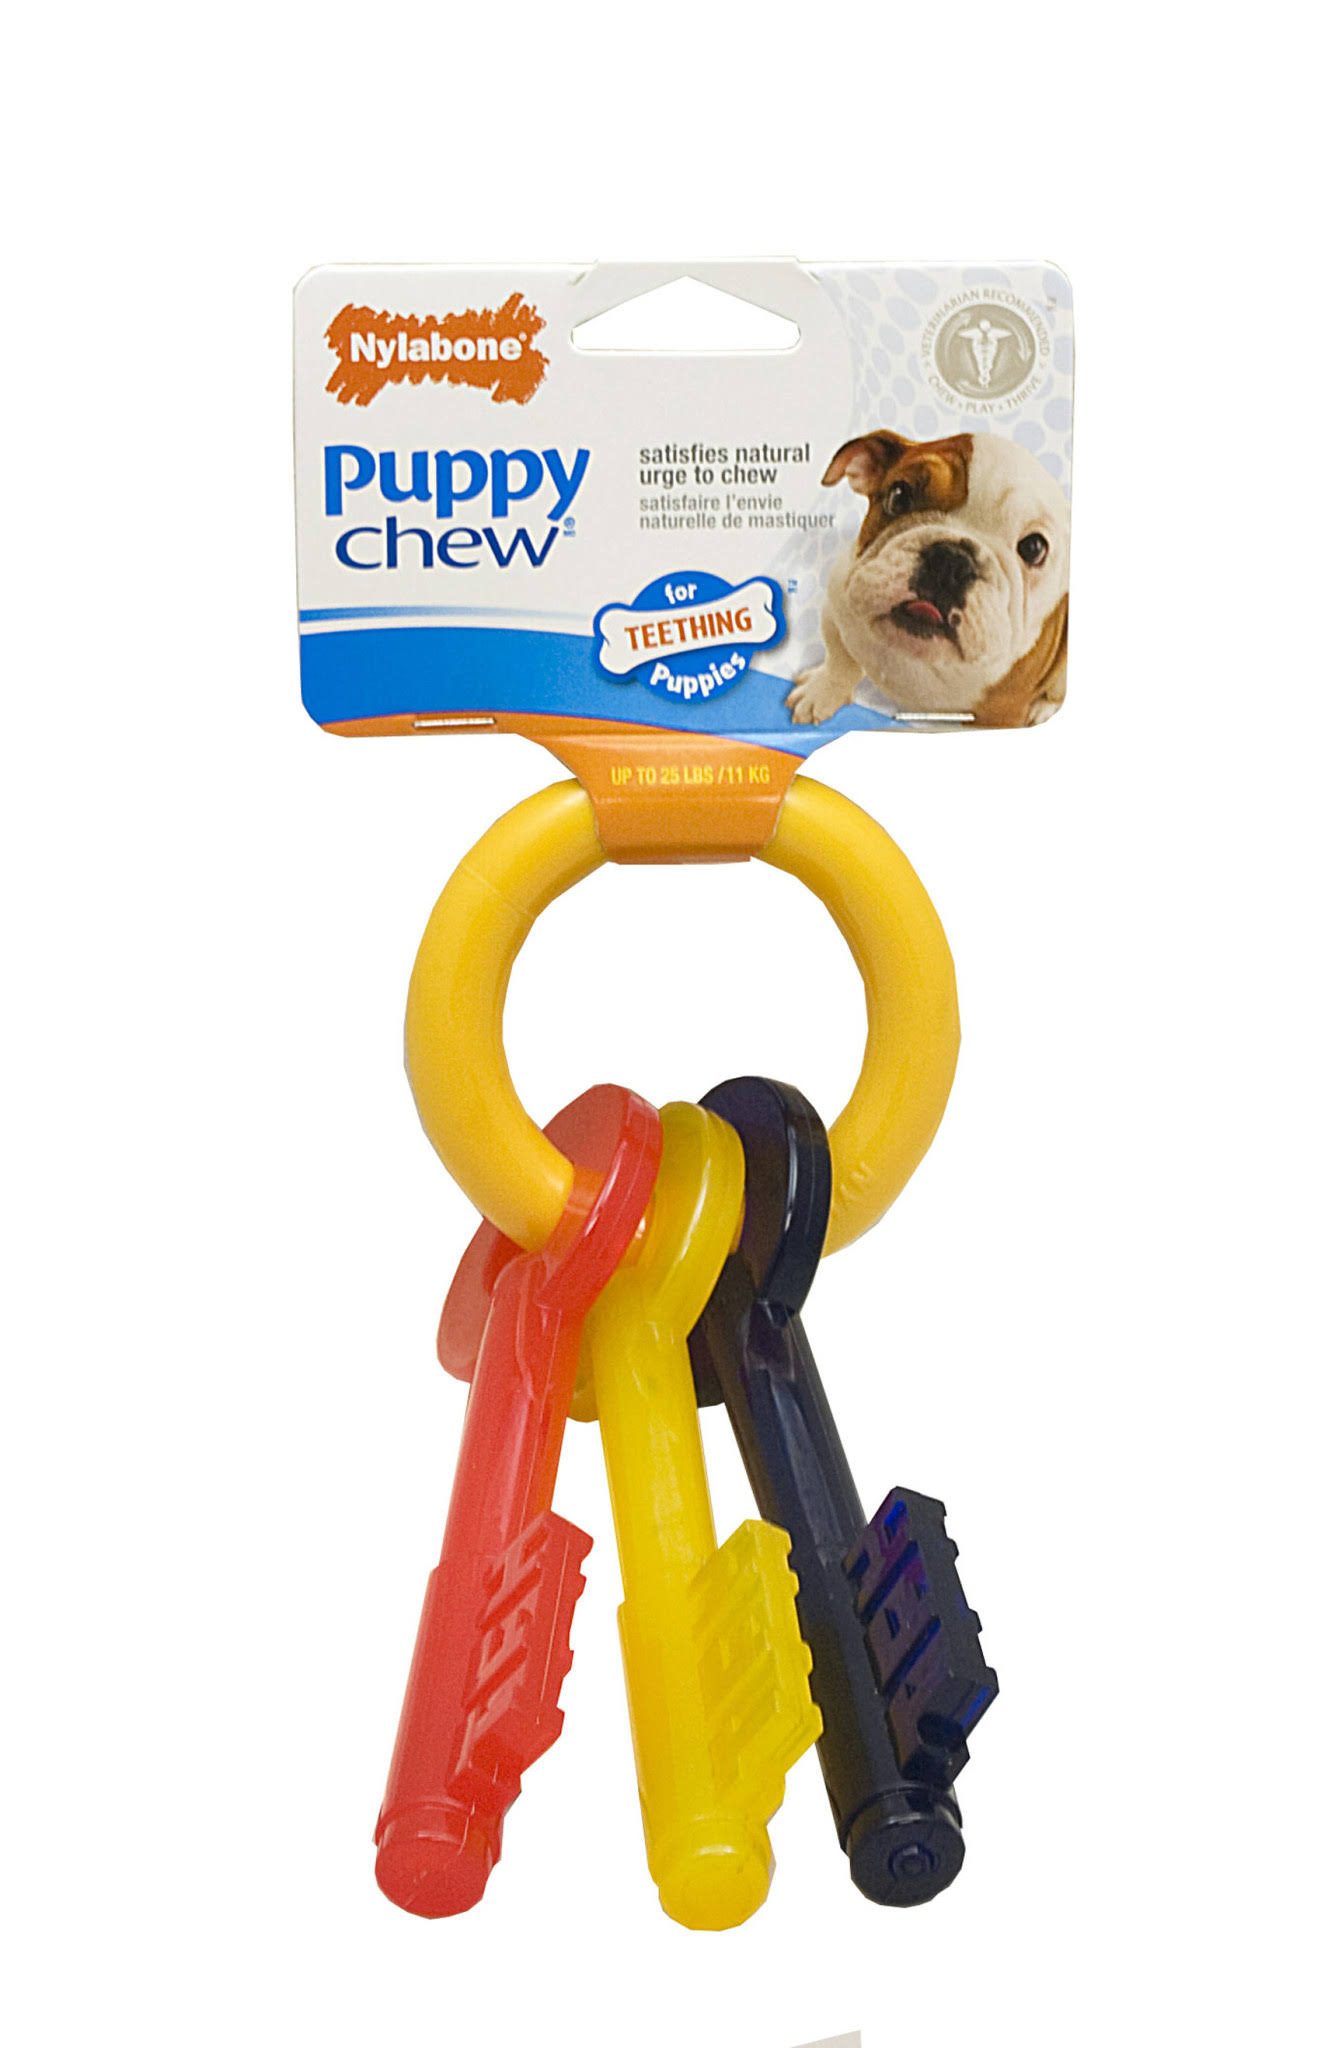 Nylabone Puppy Chew Teething Toy